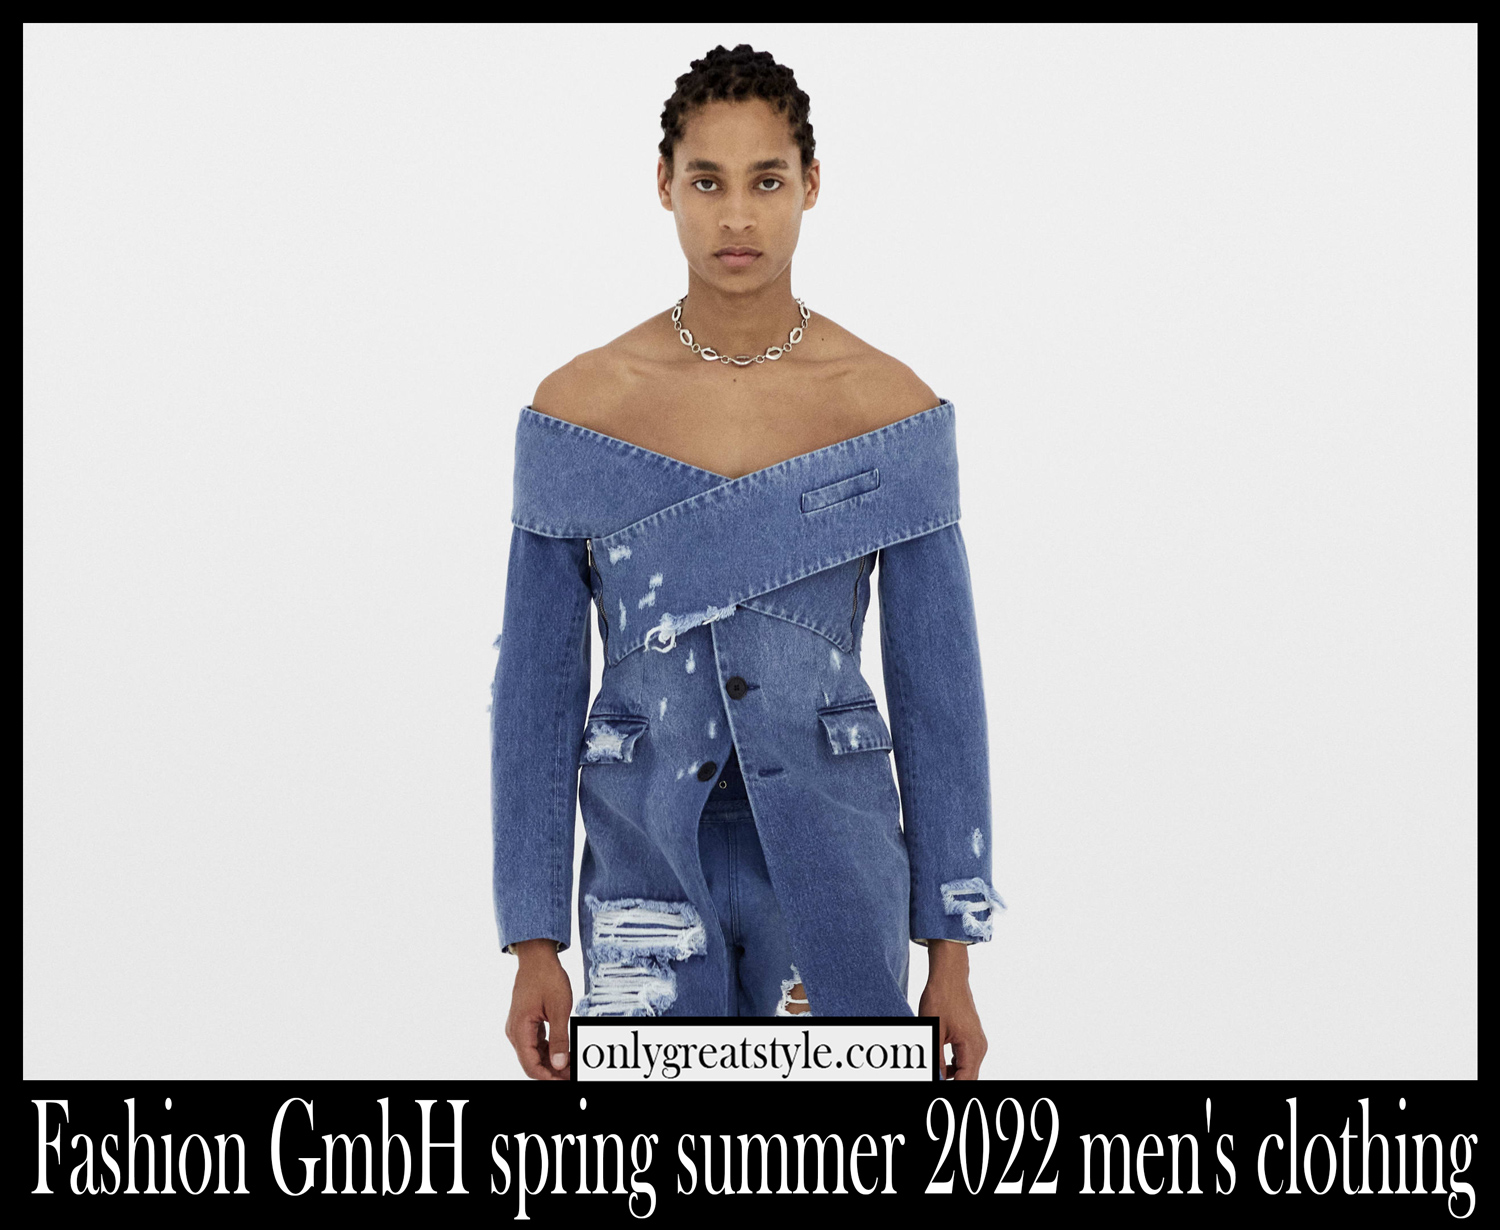 Fashion GmbH spring summer 2022 mens clothing